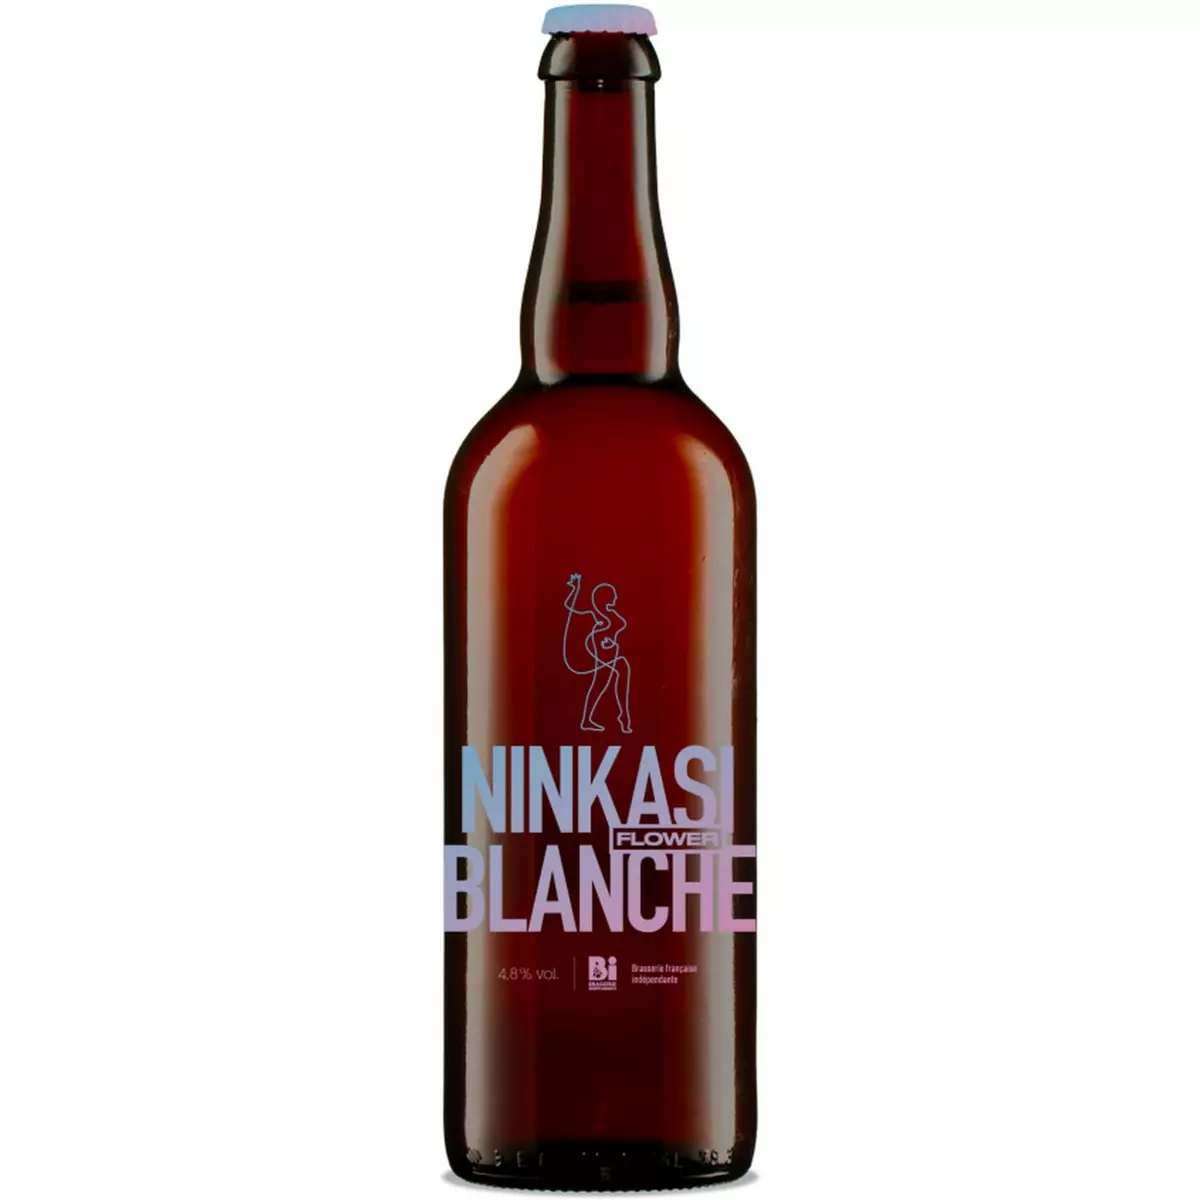 NINKASI Bière flower blanche 4.8% 75cl